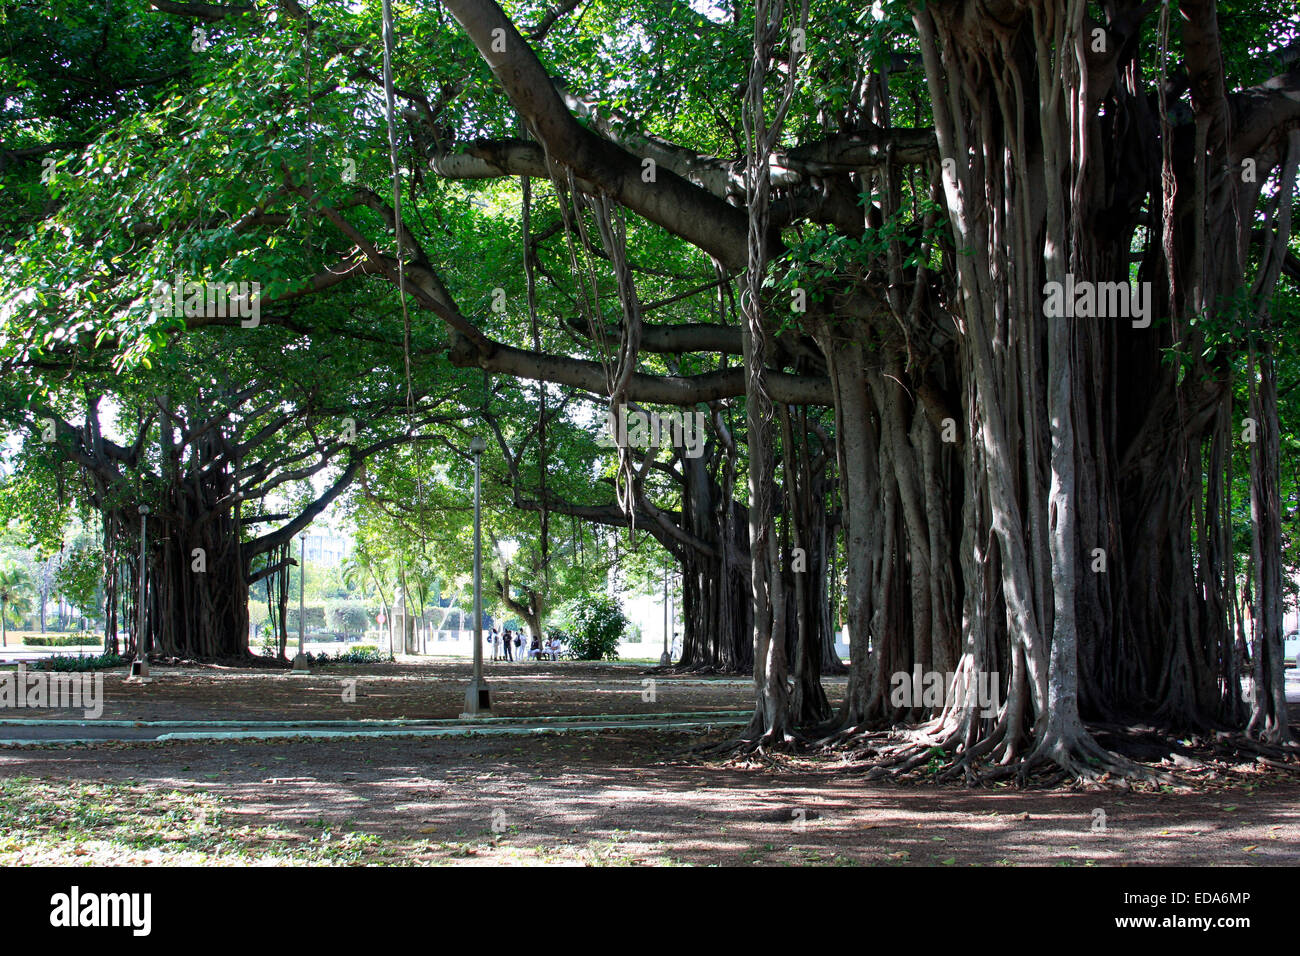 Ancient Banyan trees (ficus benghalensis) in Parque Miramar in Havana, Cuba Stock Photo